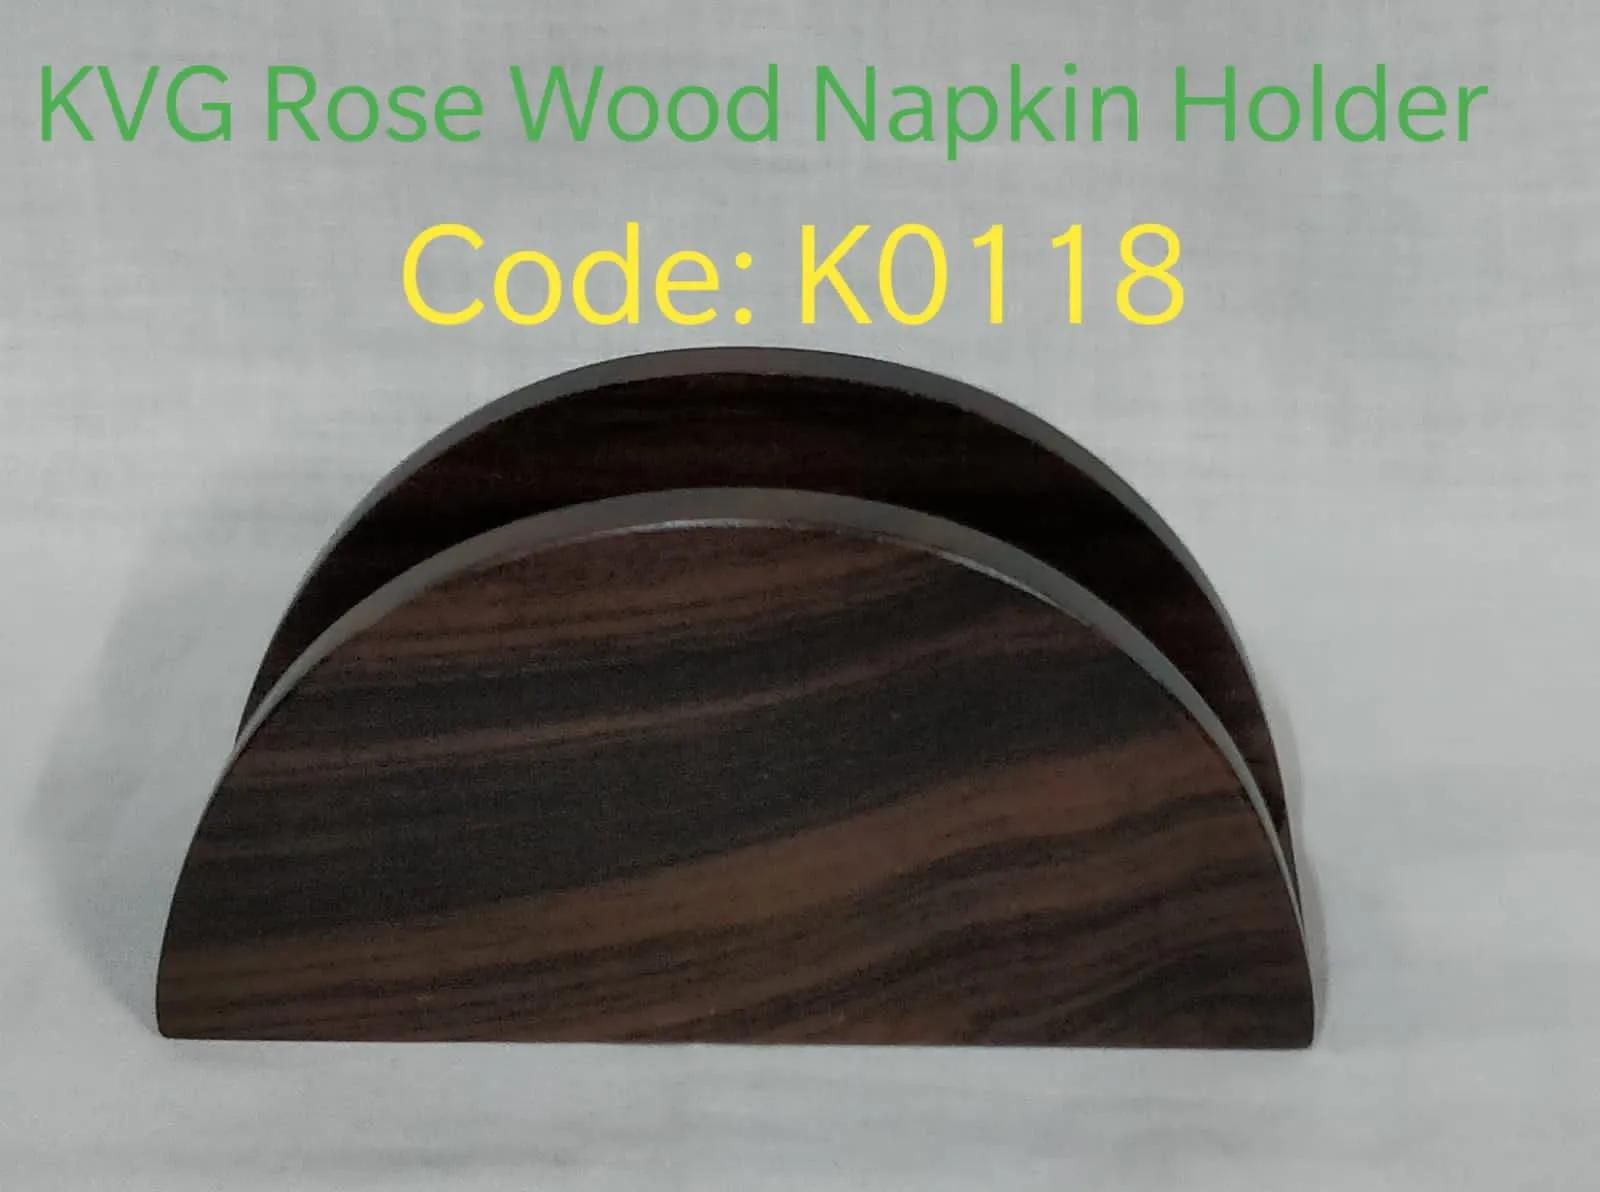 High quality Rose Wood Napkin Holder